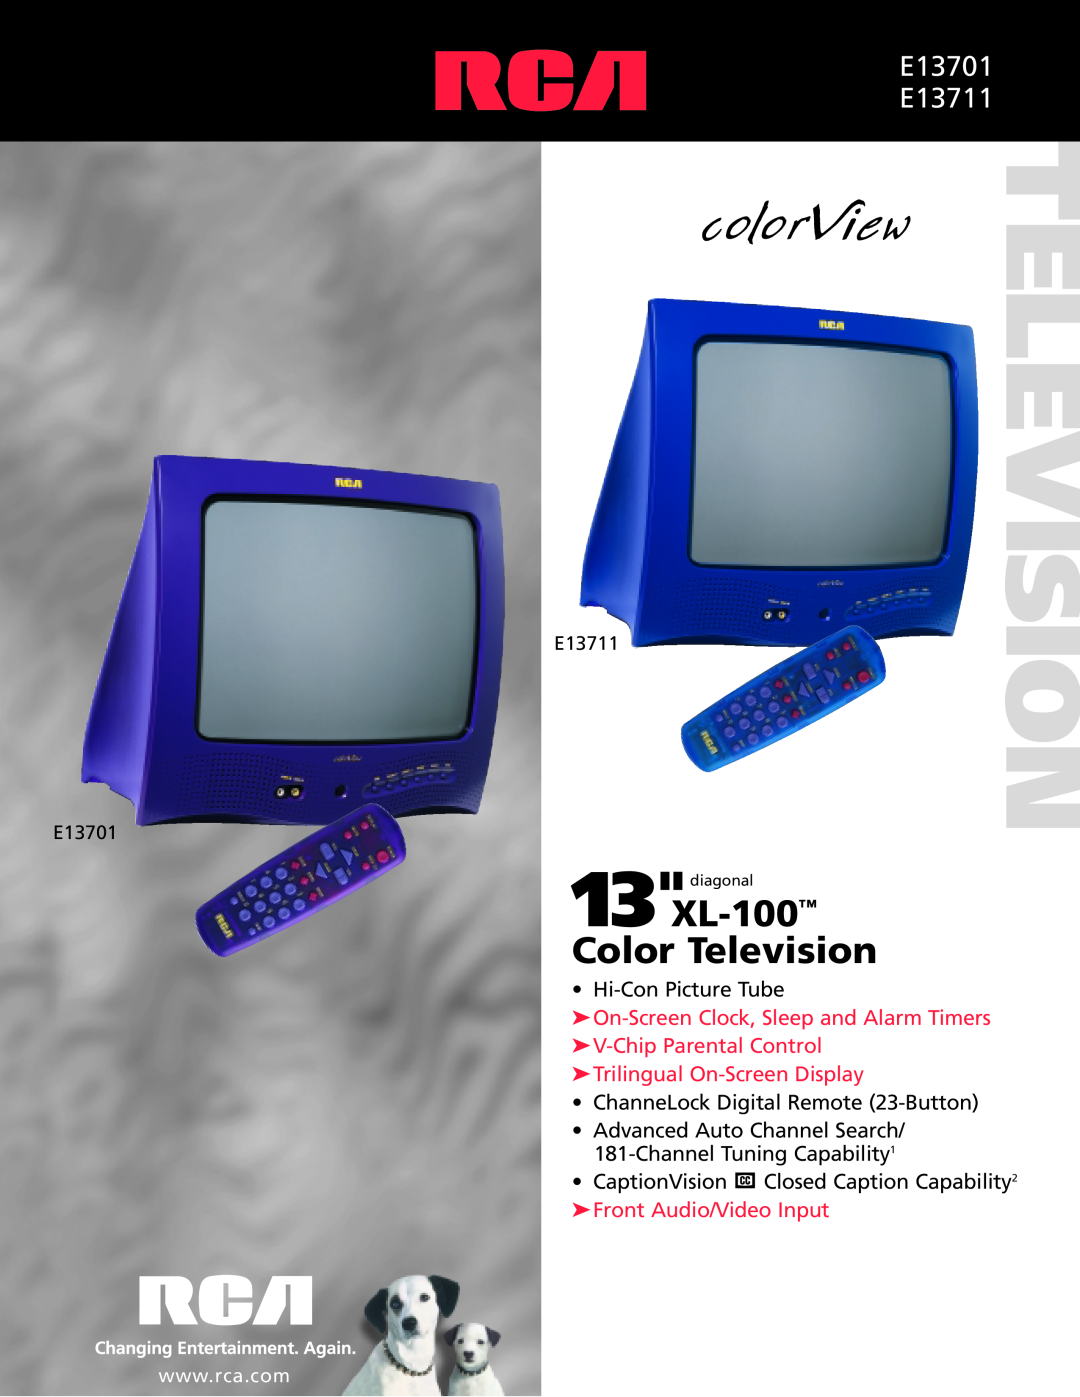 RCA manual XL-100 Color Television, E13701 E13711, Hi-Con Picture Tube, Trilingual On-Screen Display, 13diagonal 